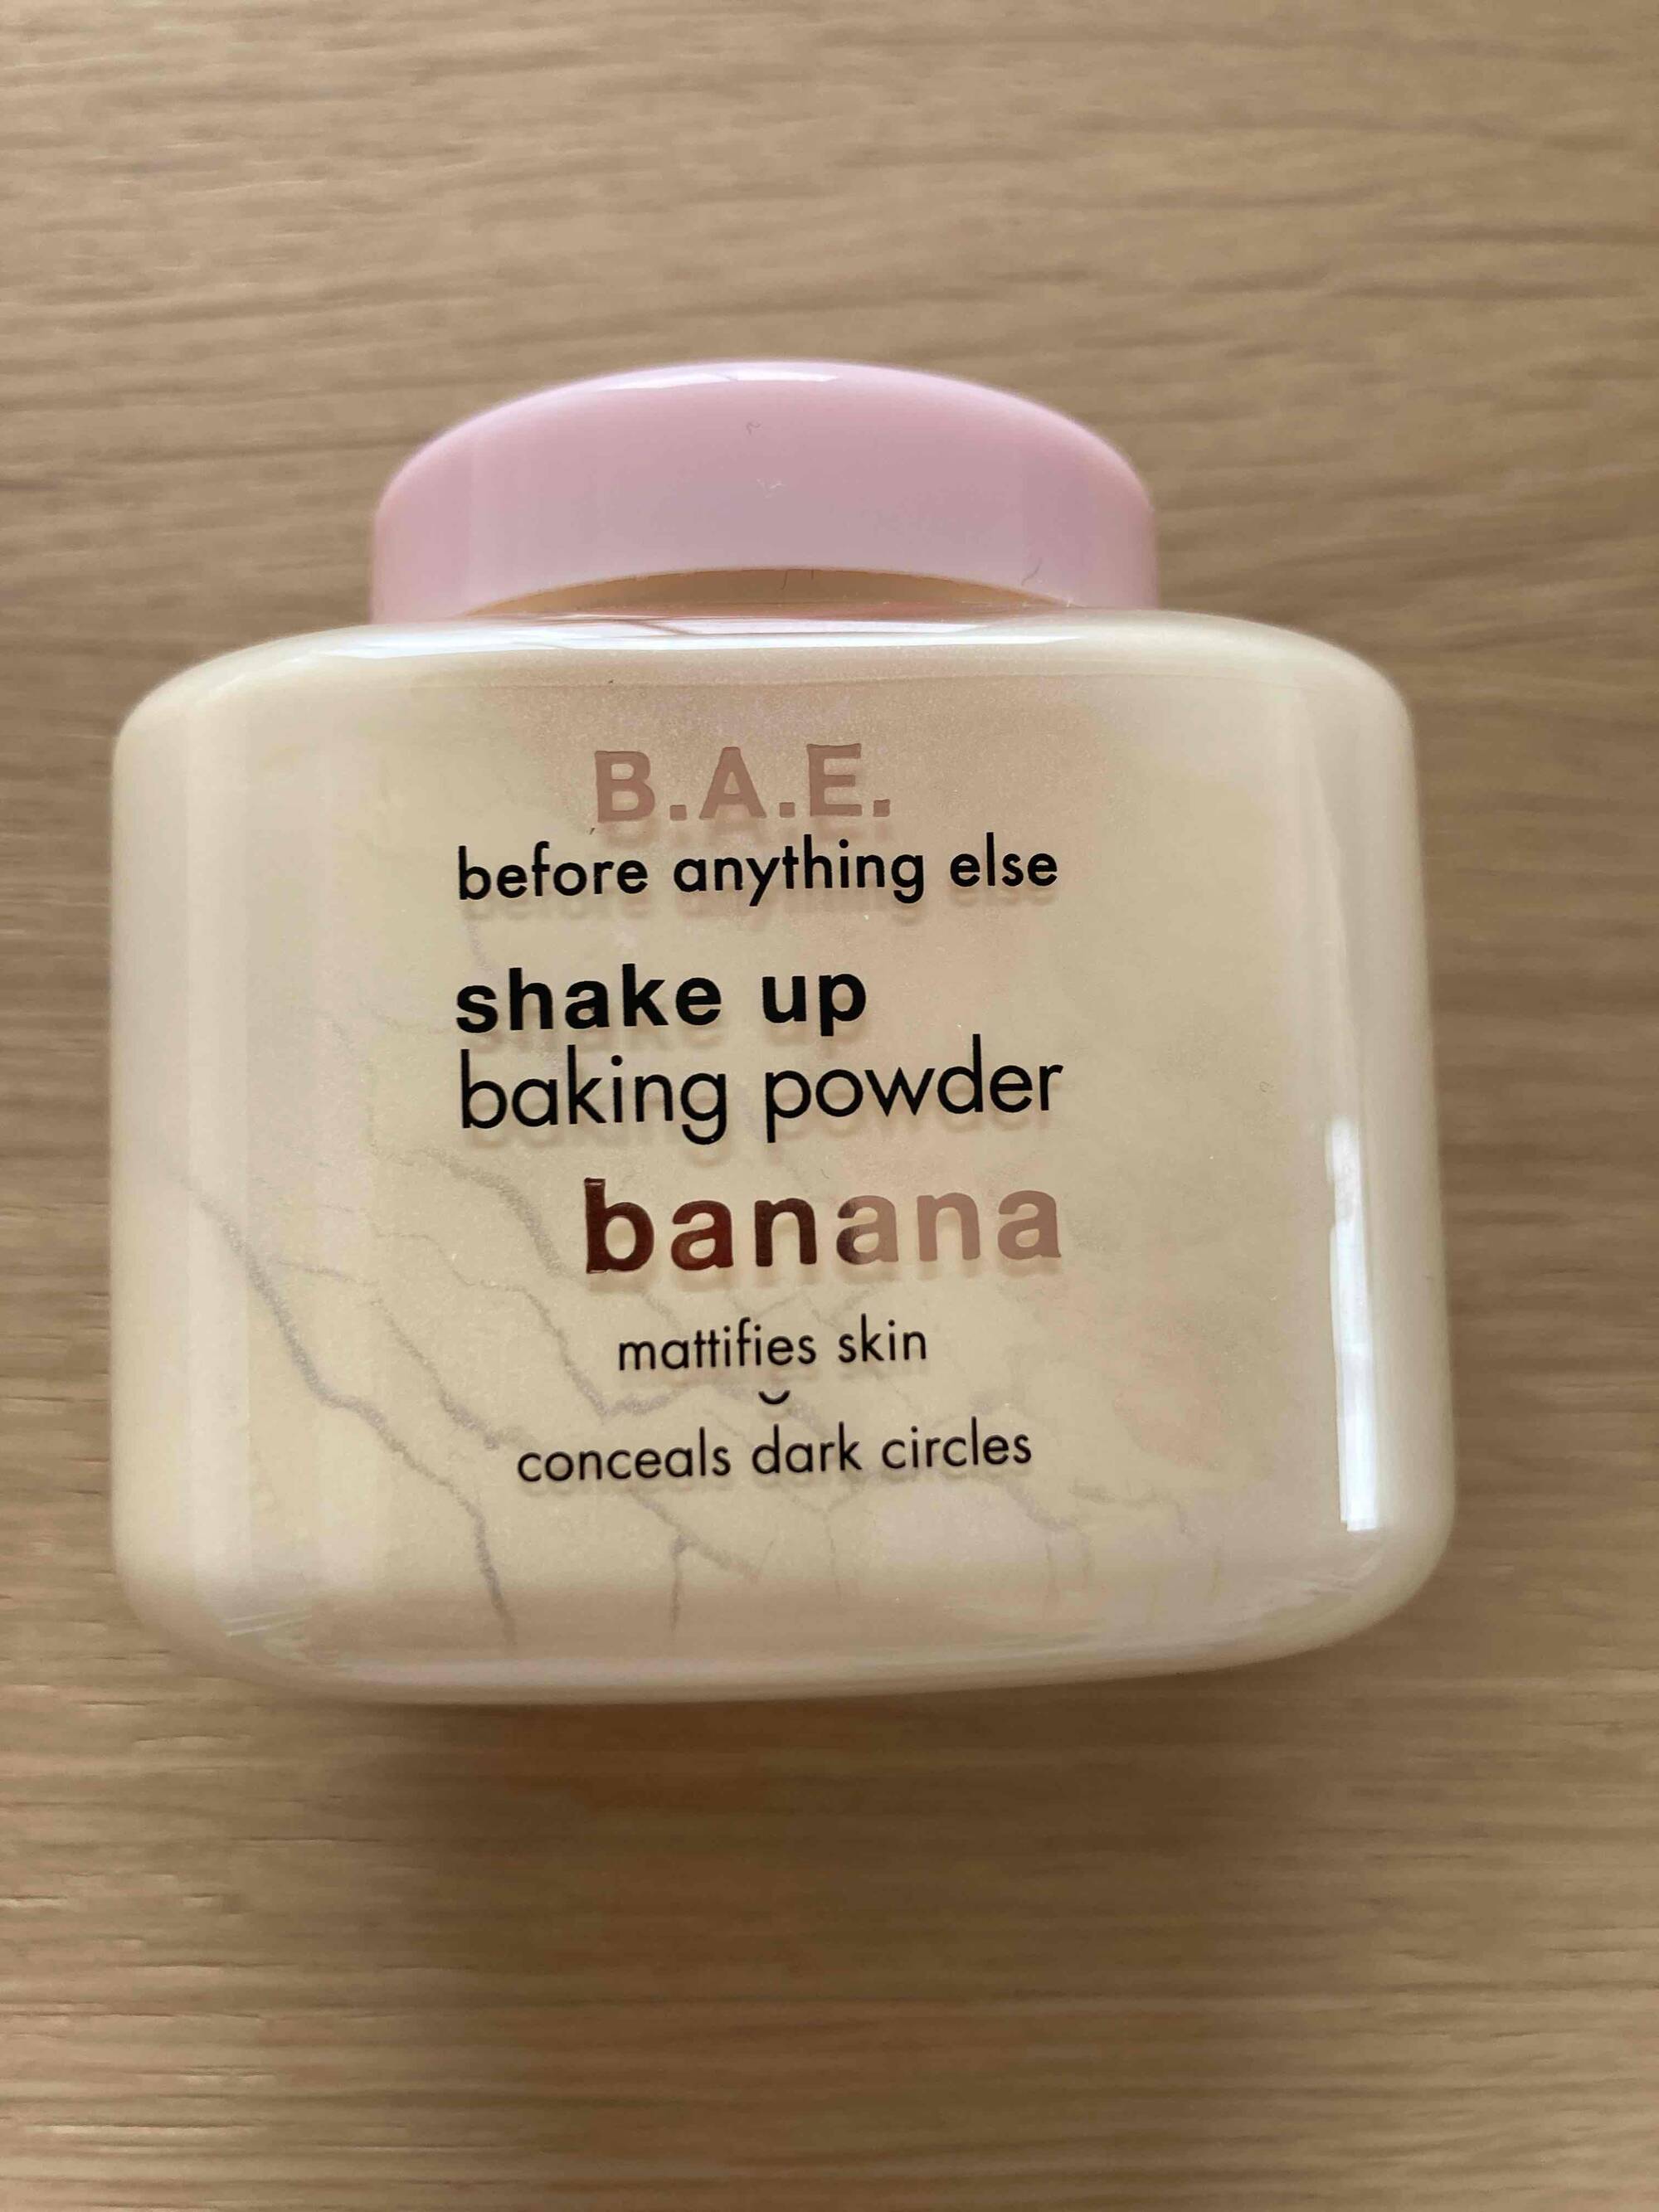 B.A.E - Banana - Shake up baking powder